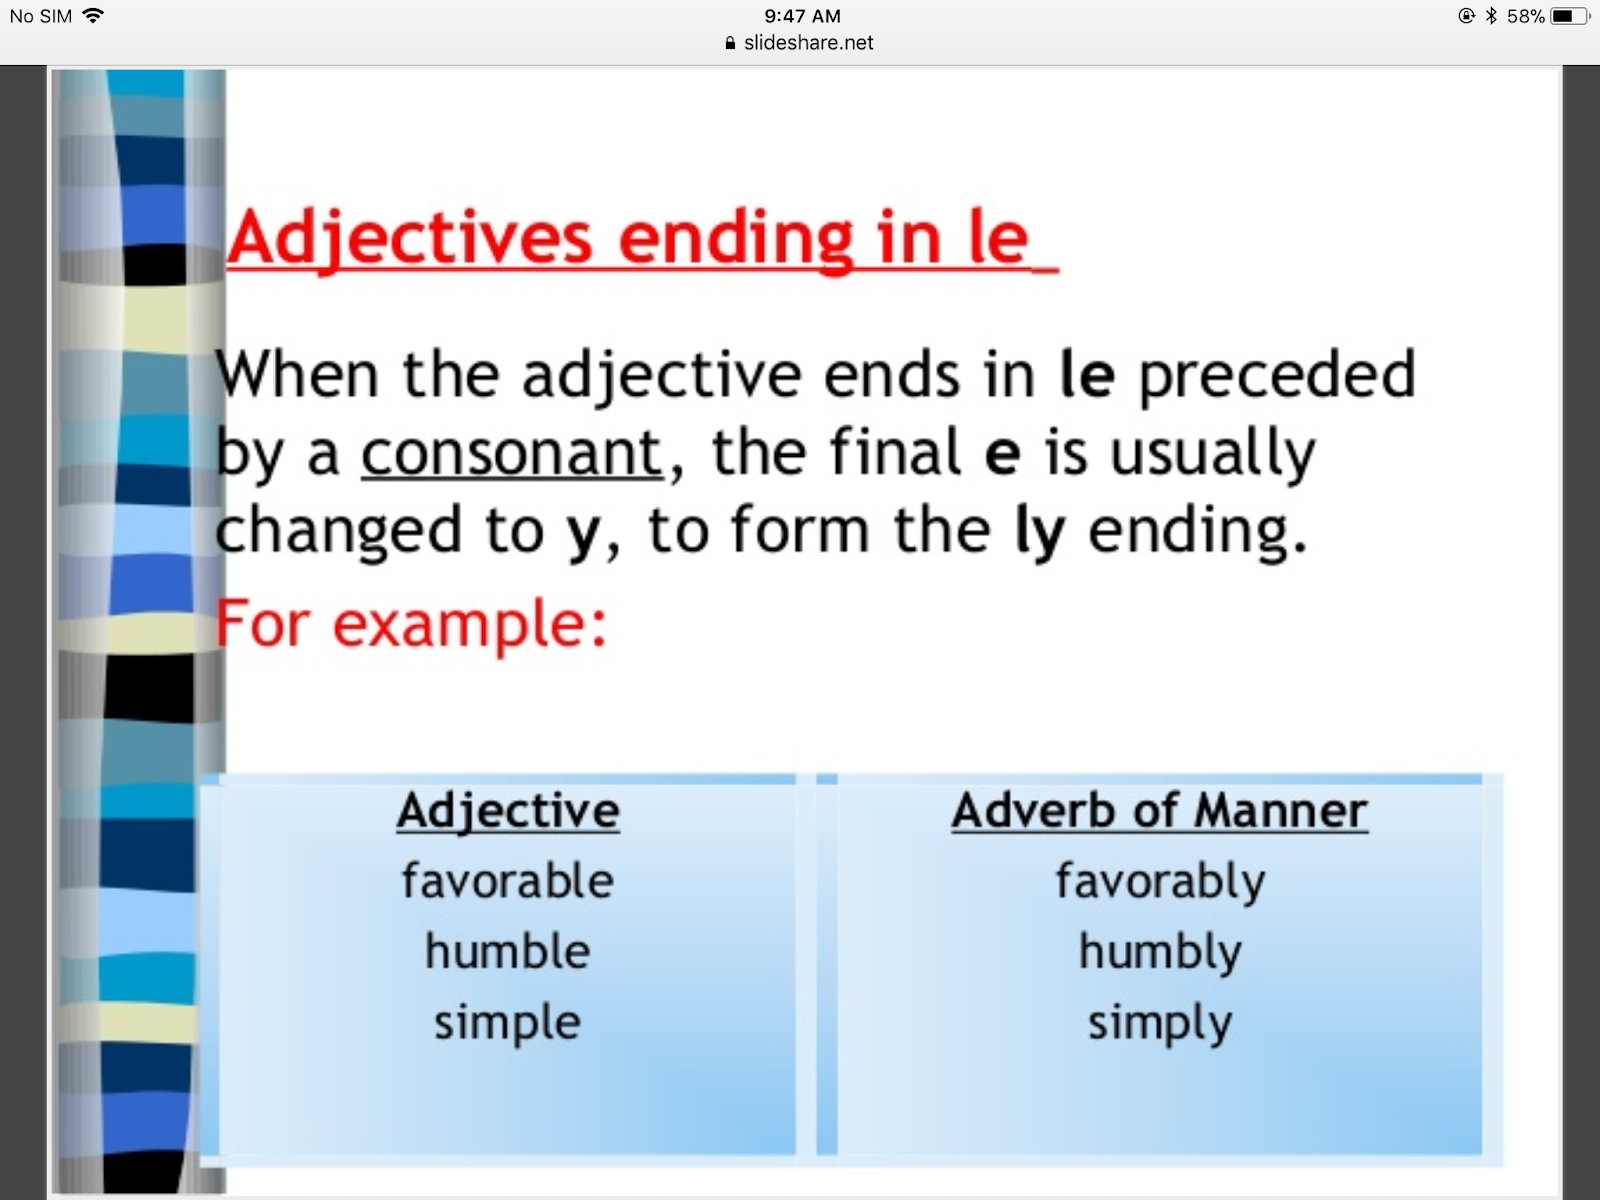 E4success: Adverbs of Manner